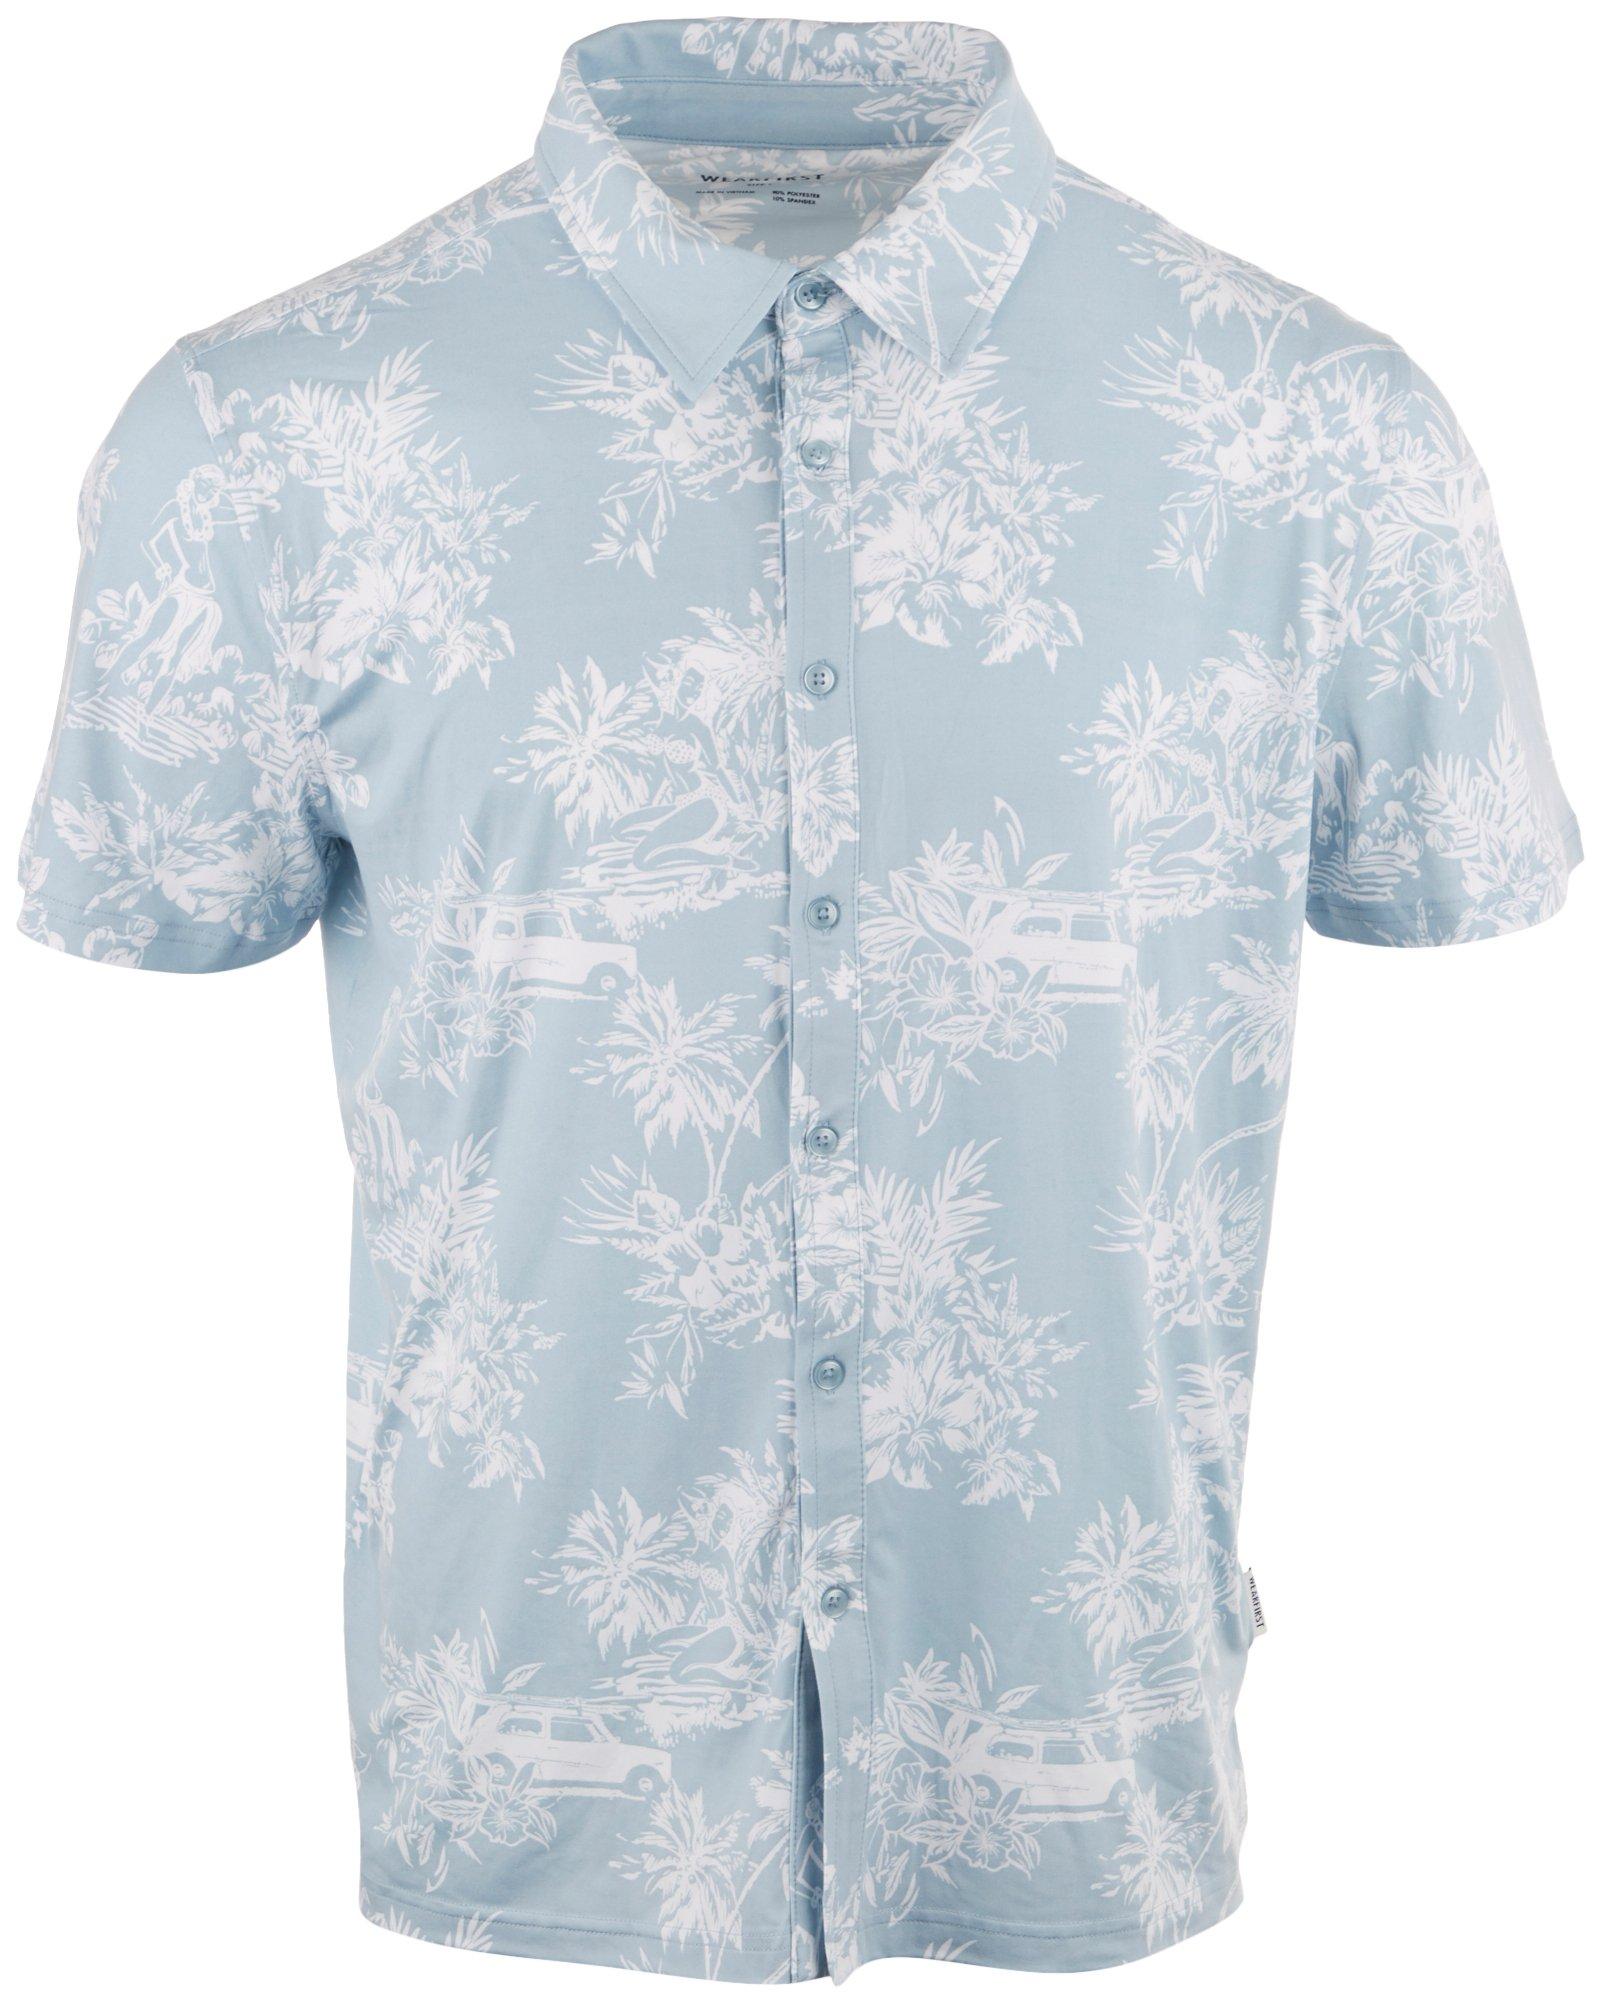 Wearfirst Mens Knit Tropical Print  Short Sleeve Shirt